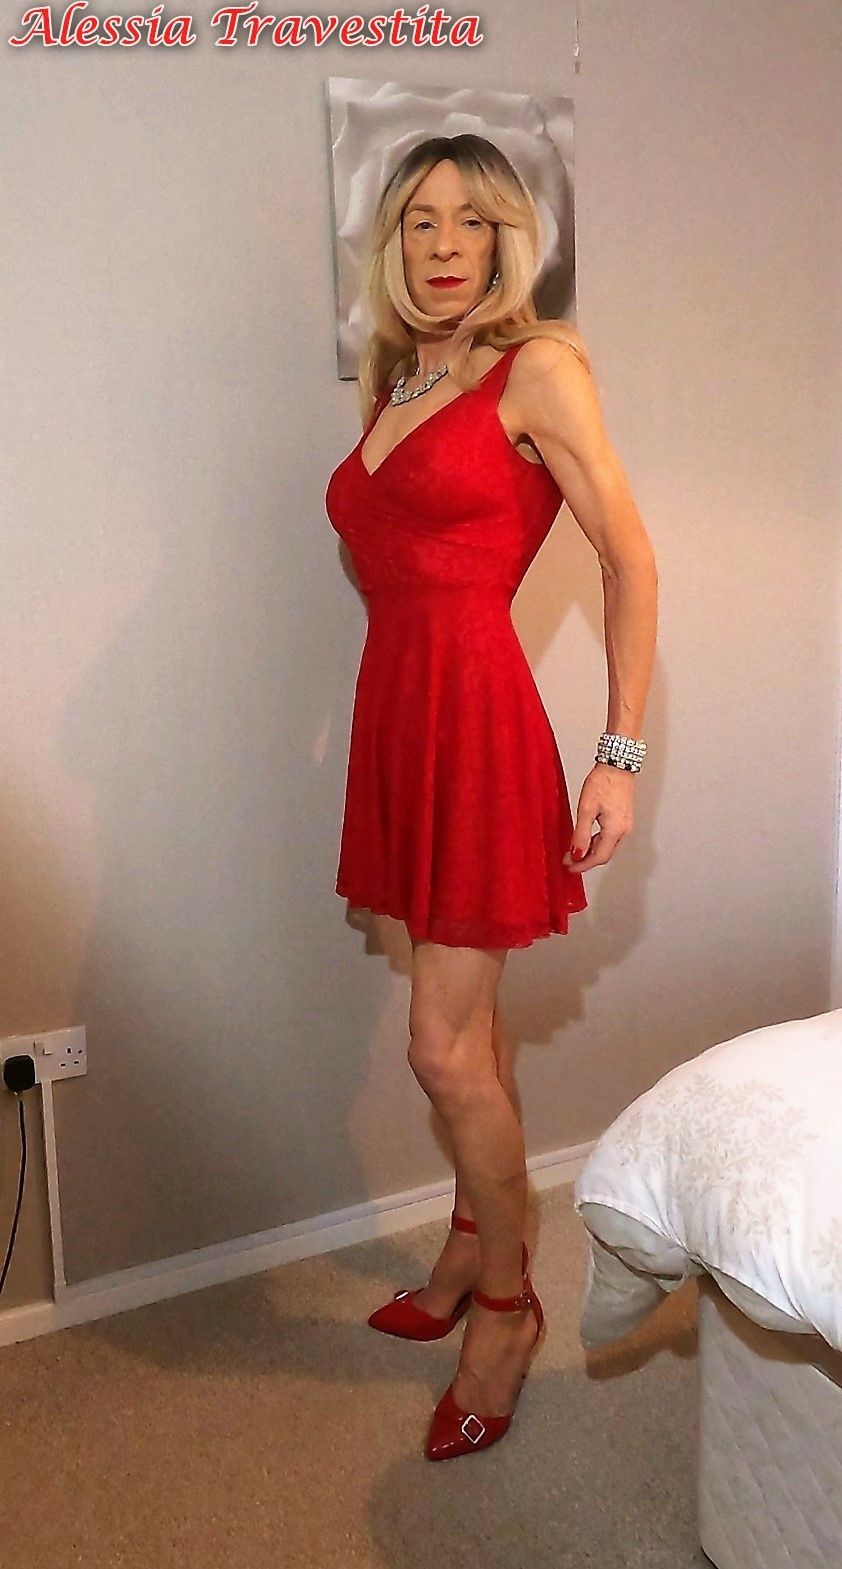 65 Alessia Travestita in Flirty Red Dress #8